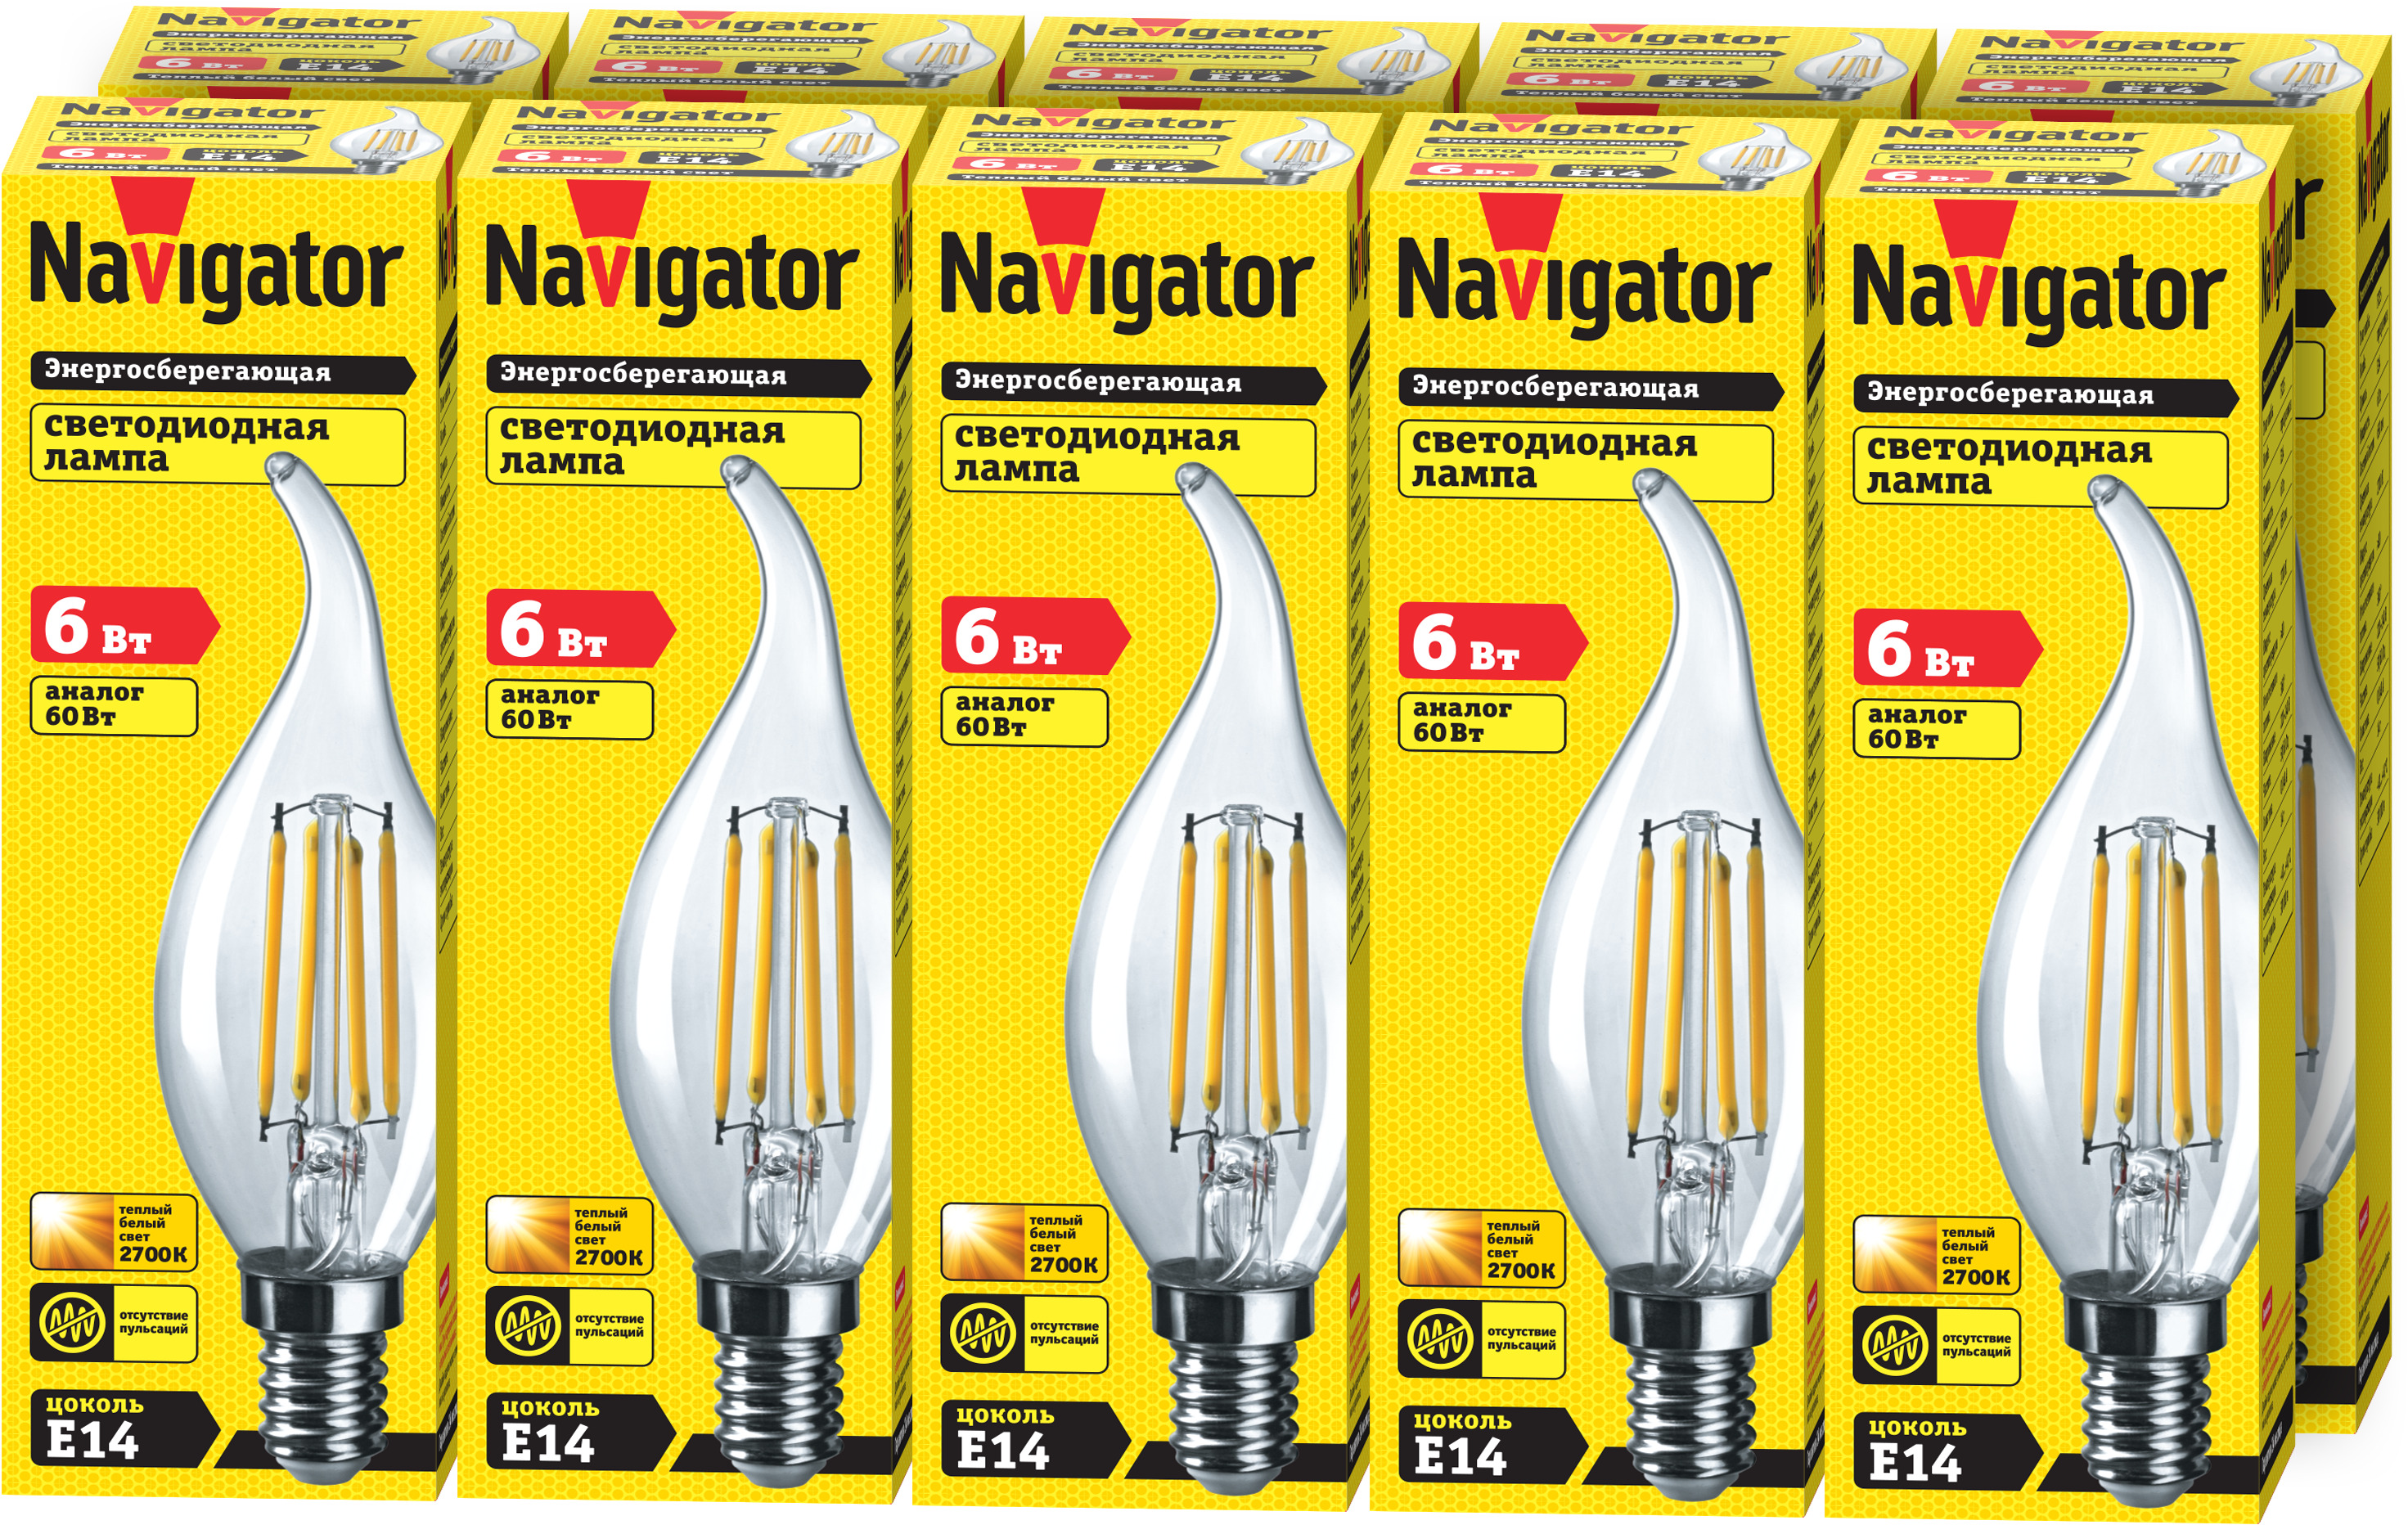 Лампа светодиодная Navigator 61 355, 6 Вт, свеча на ветру Е14, 2700K